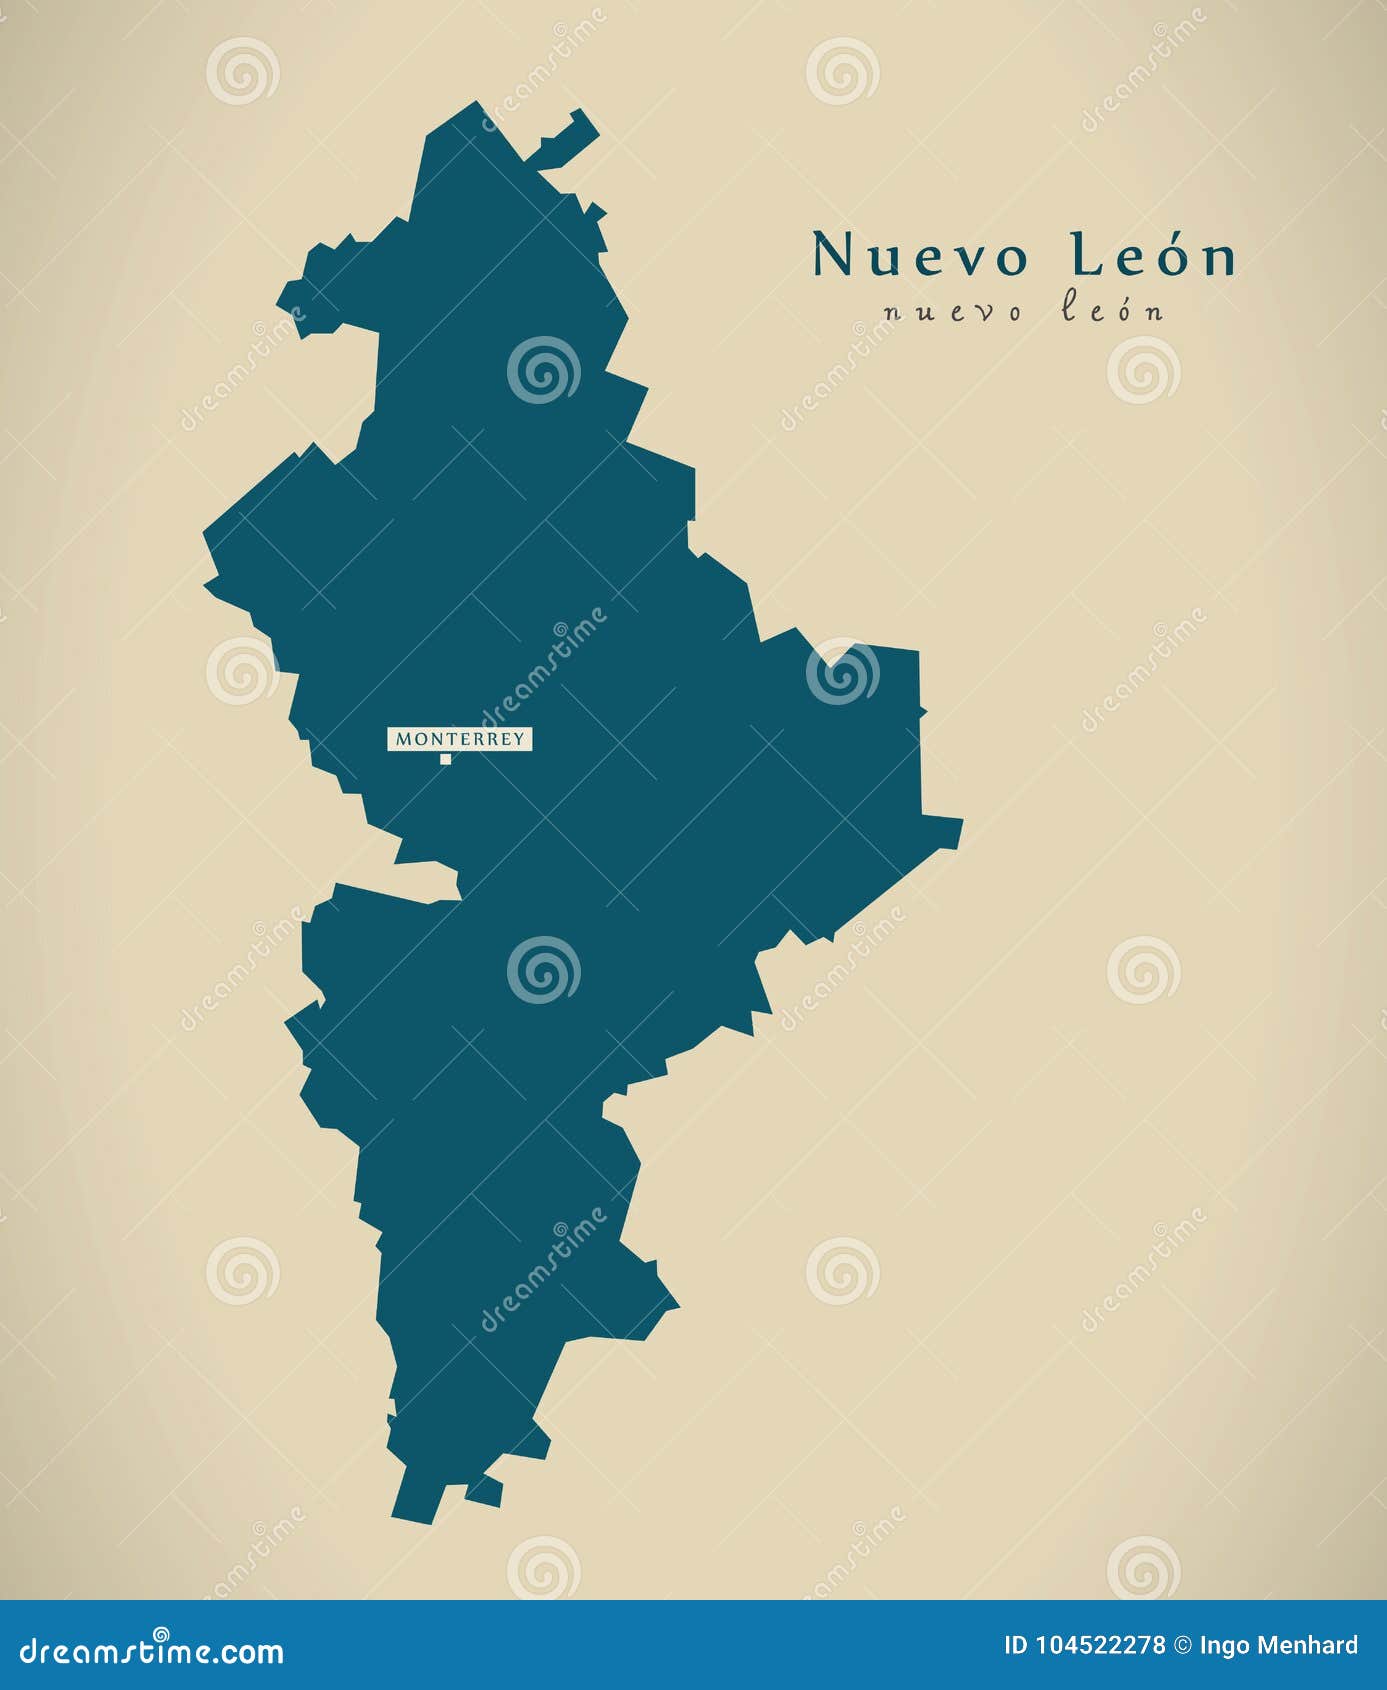 modern map - nuevo leon mexico mx